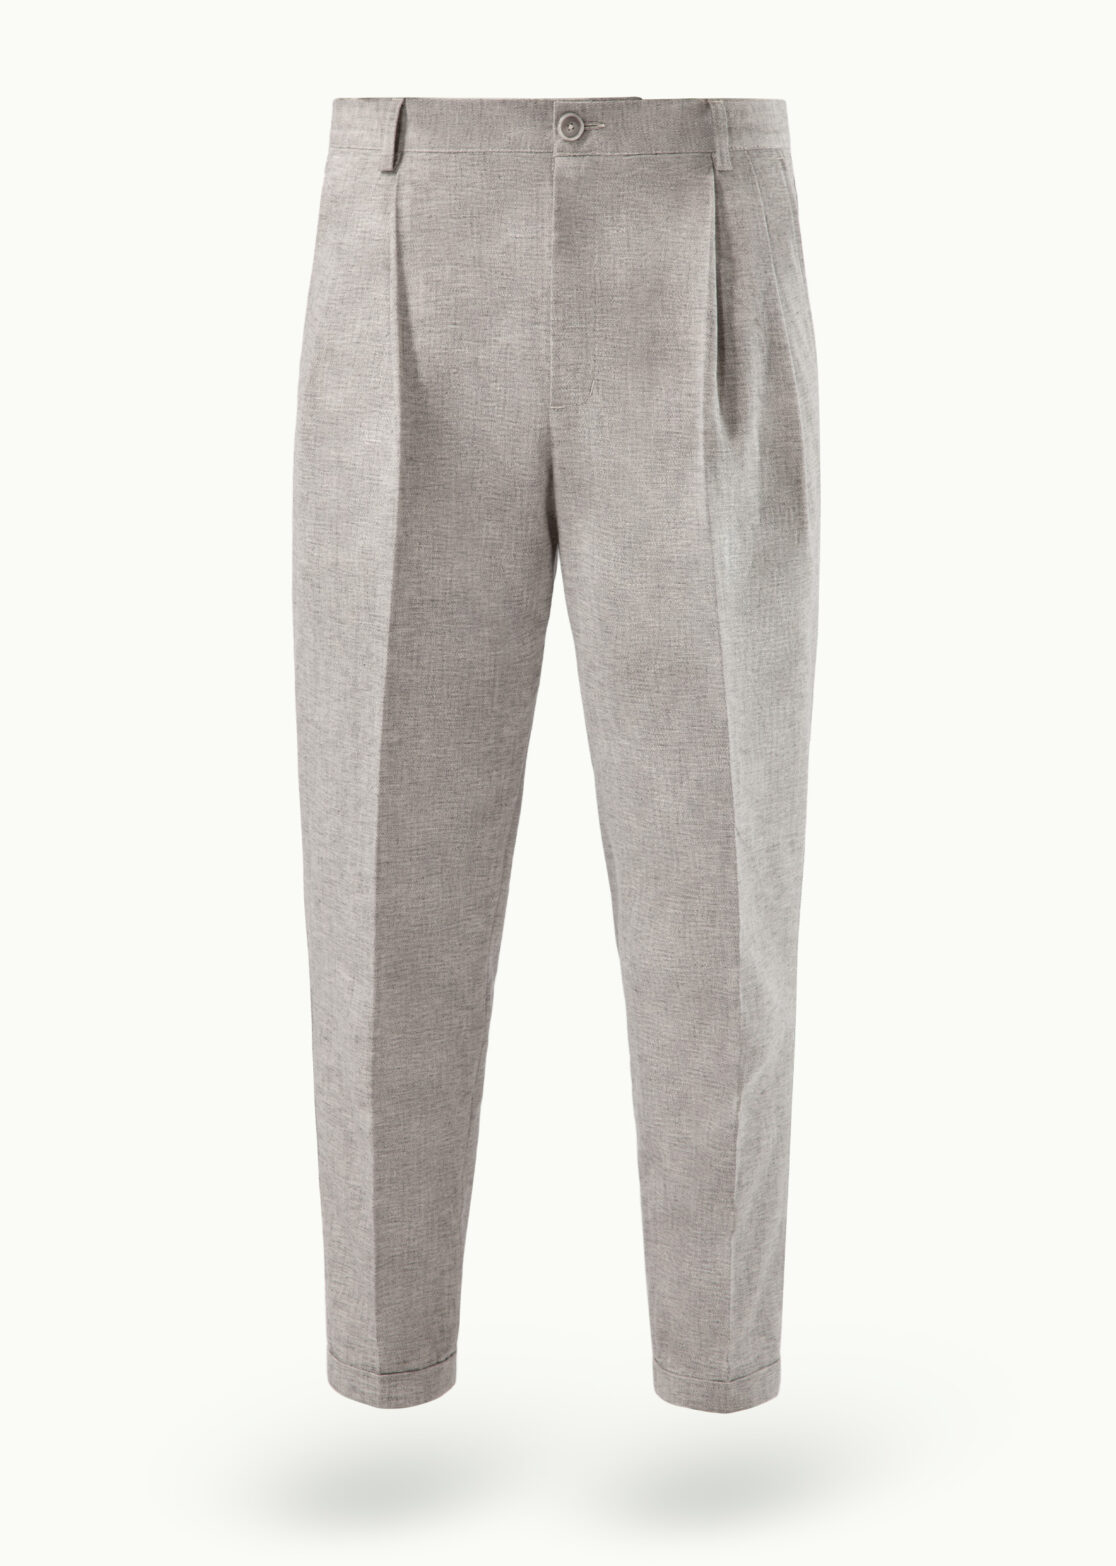 Men - Denim - Trousers - Mahorka Light Grey Image Primary